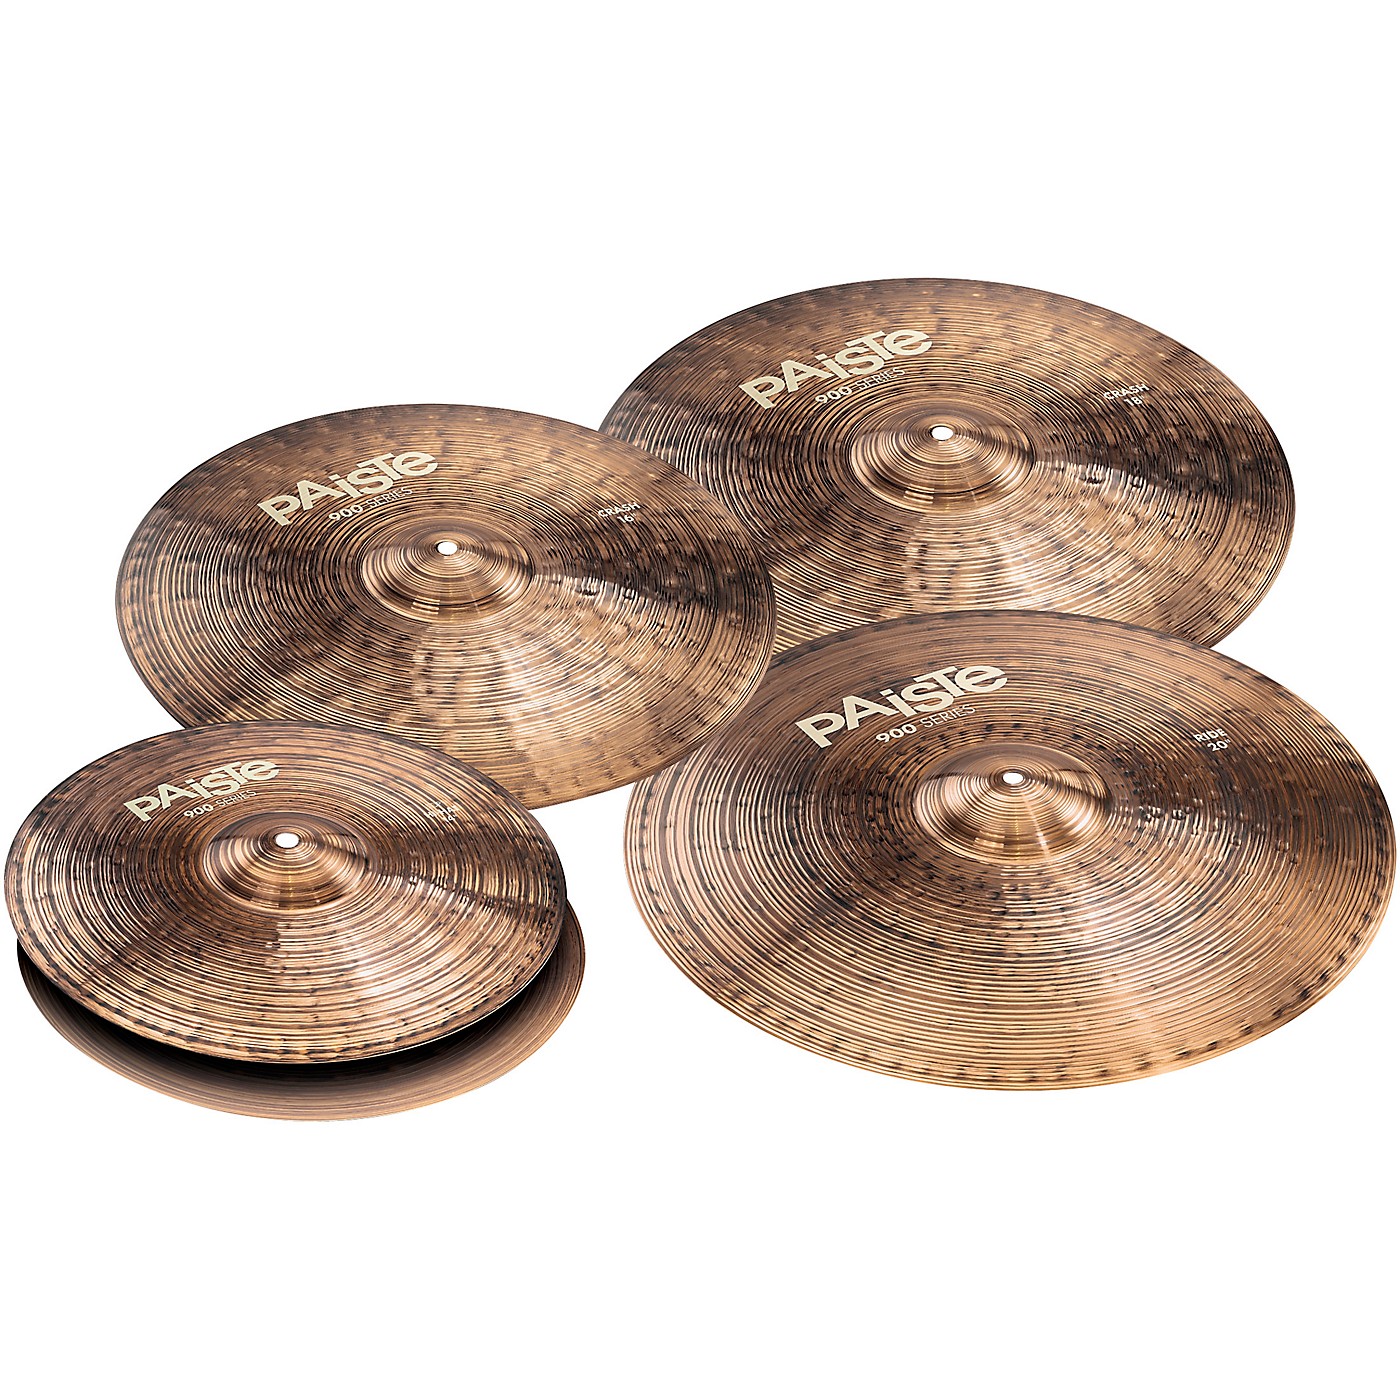 Paiste 900 Series Medium Cymbal Set Extended Even thumbnail